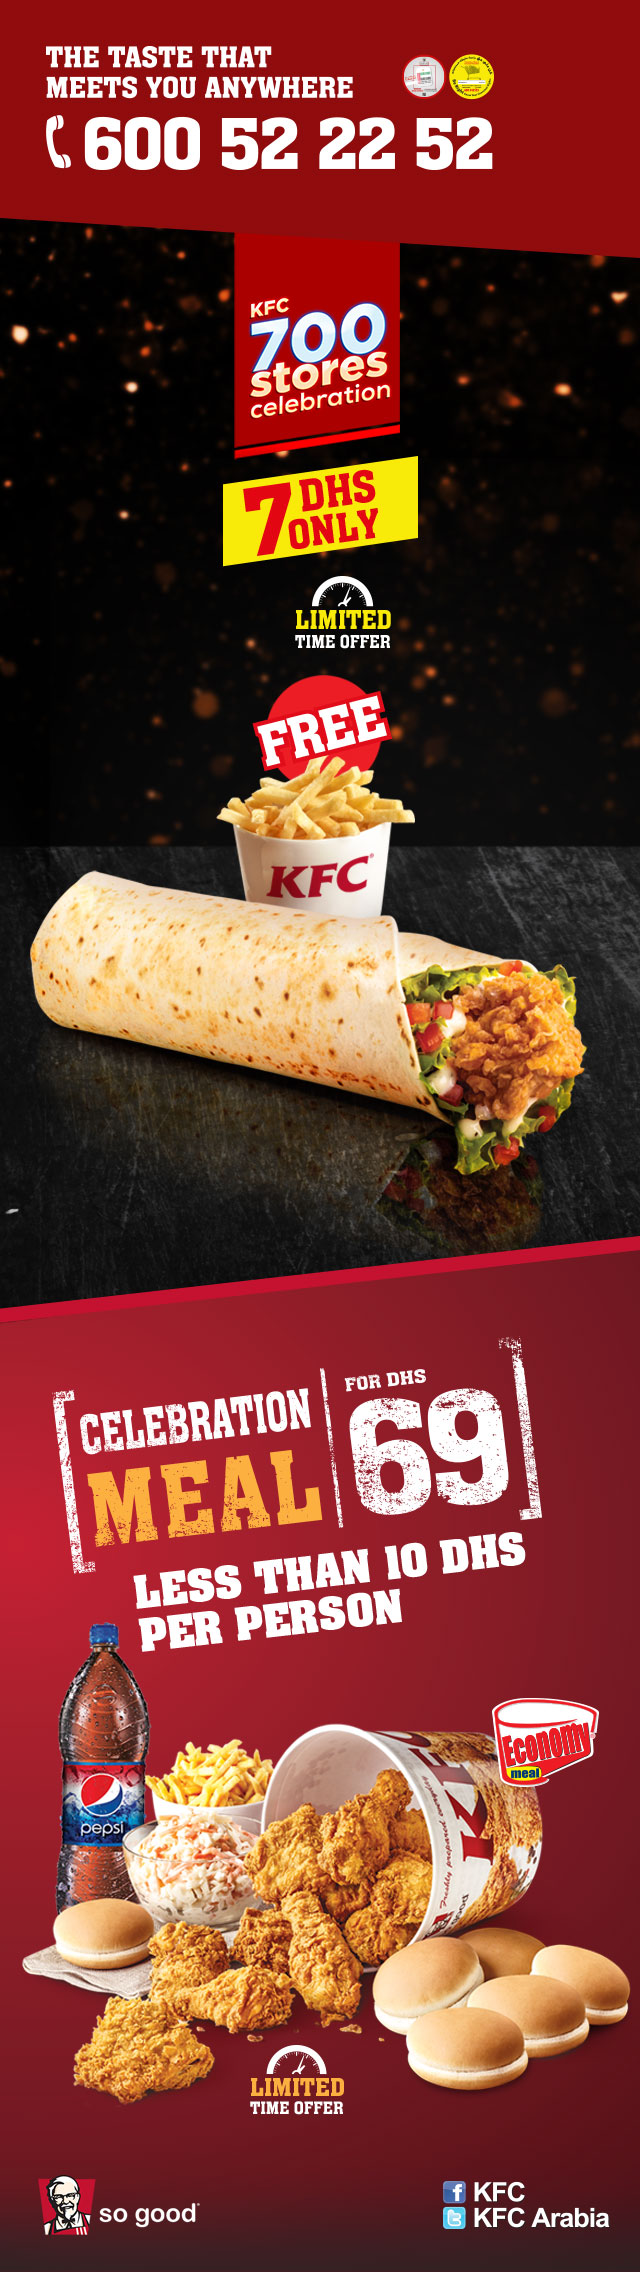 KFC 700 stores celebration